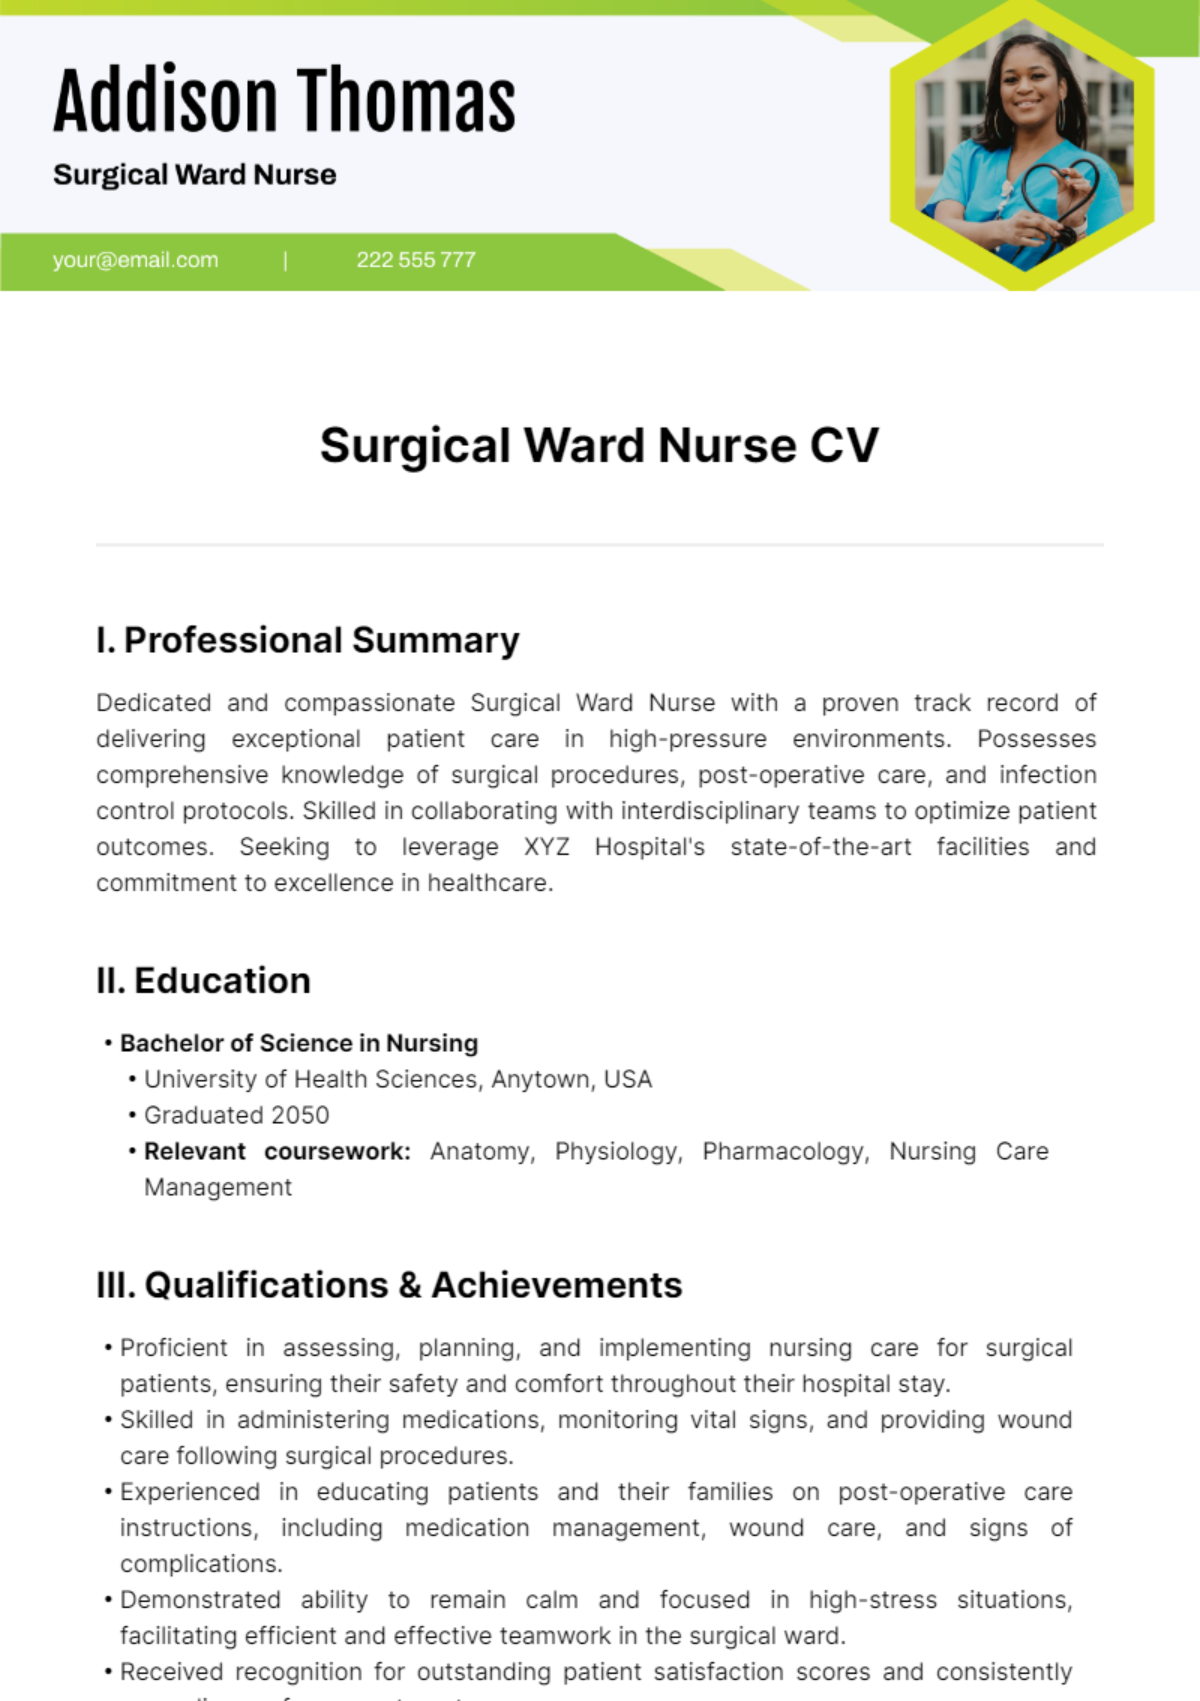 Surgical Ward Nurse CV Template